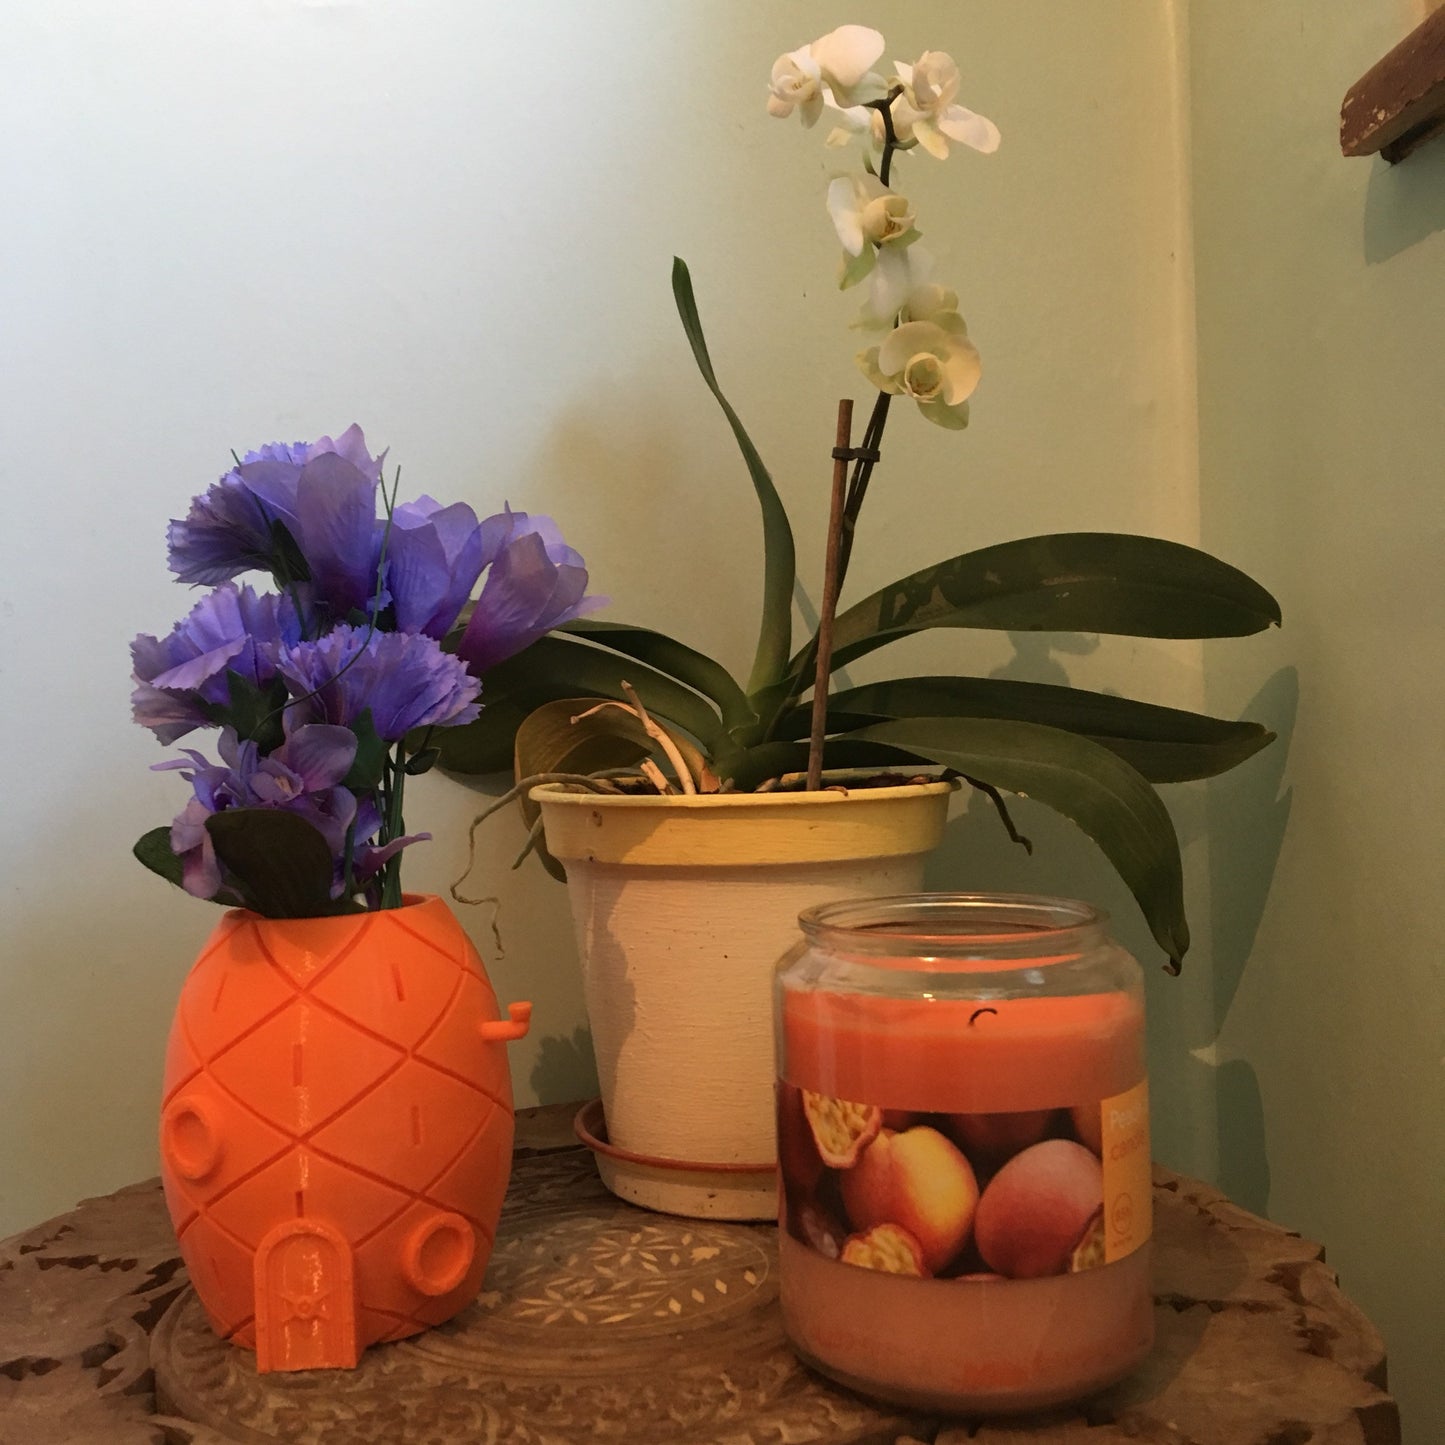 Spongebob Pineapple Plant Pot / Planter / Gift / Decor